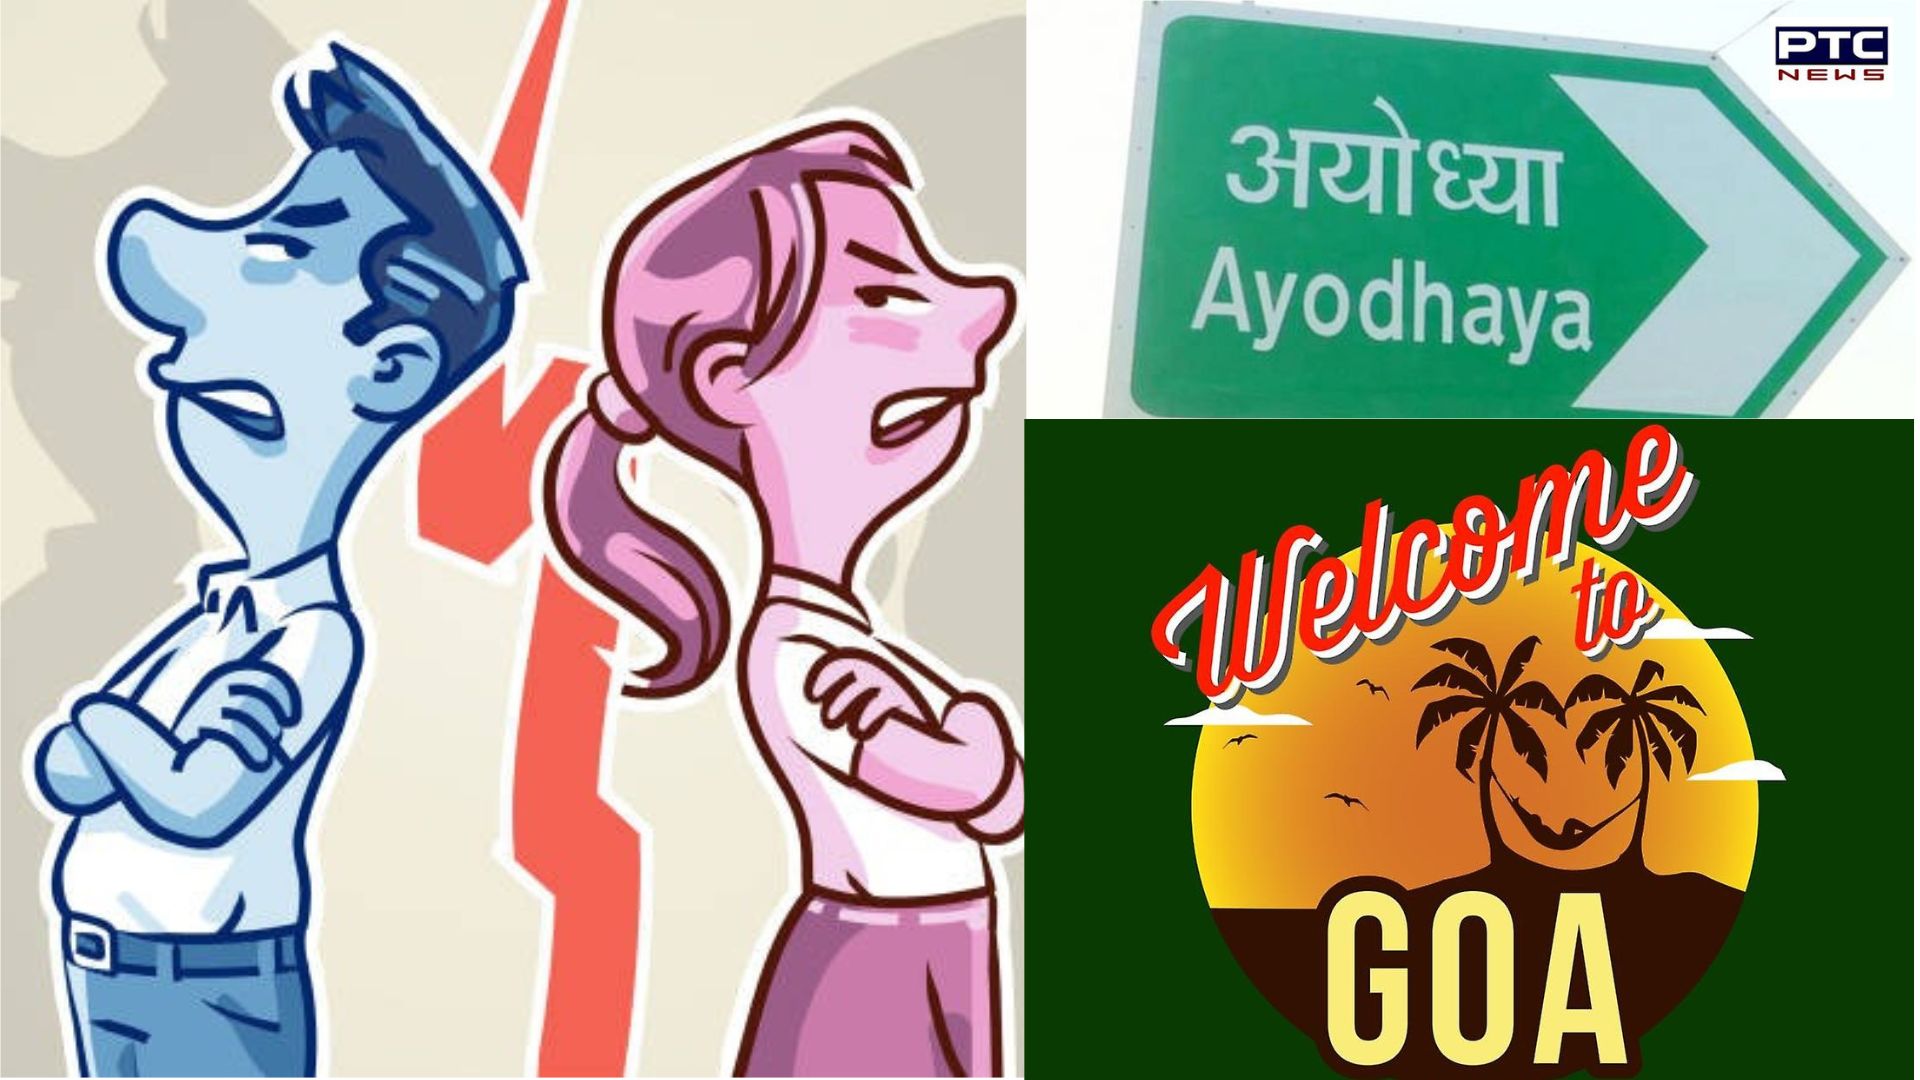 Woman seeks divorce after honeymoon takes spiritual turn to Ayodhya instead of Goa!